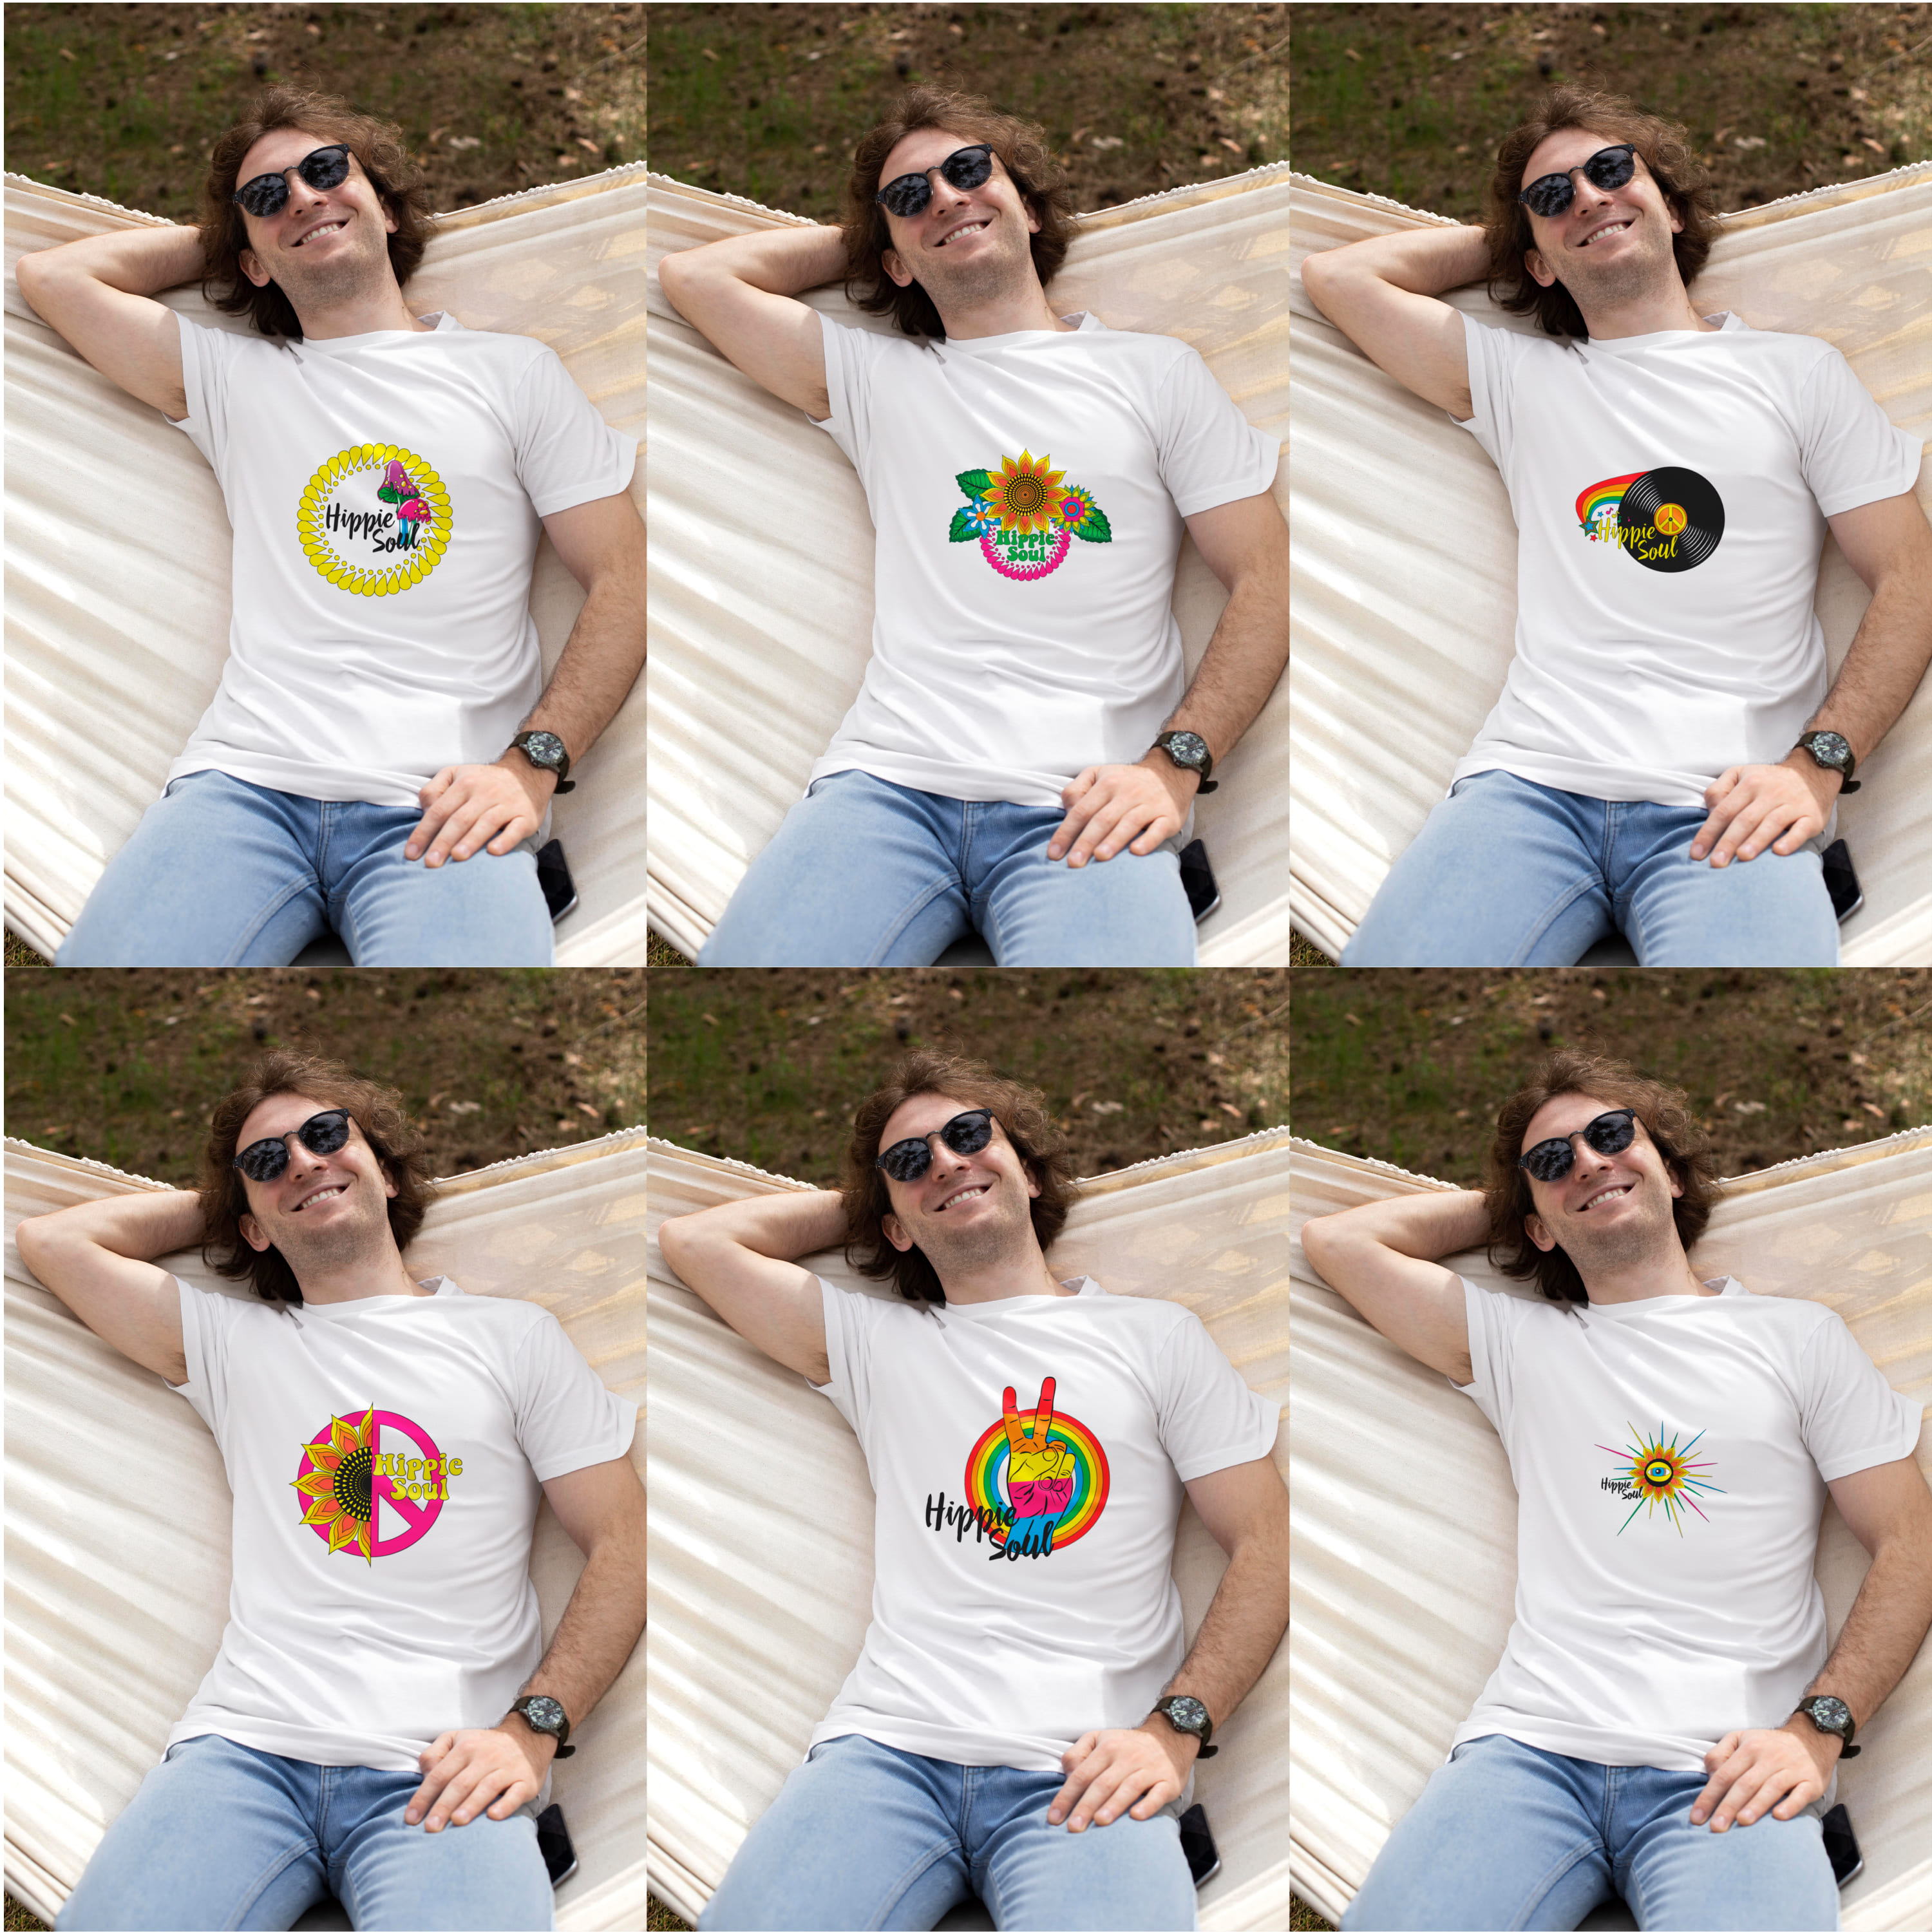 Big diversity of hippie t-shirts designs.